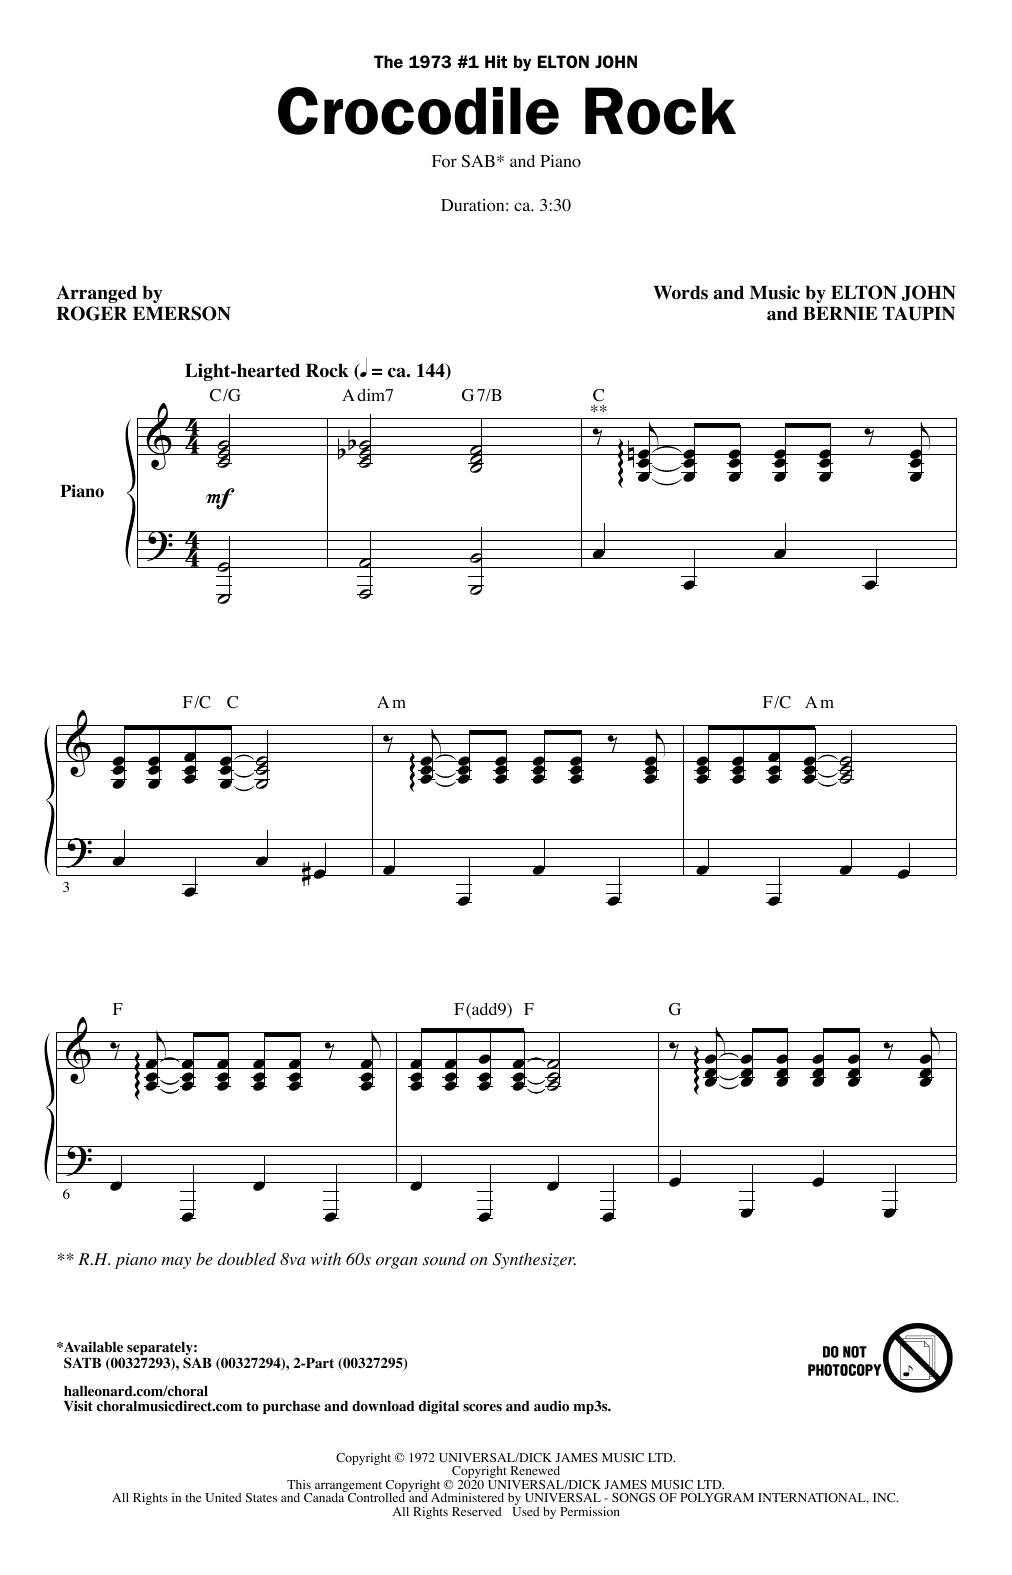 Elton John Crocodile Rock (arr. Roger Emerson) Sheet Music Notes & Chords for 2-Part Choir - Download or Print PDF